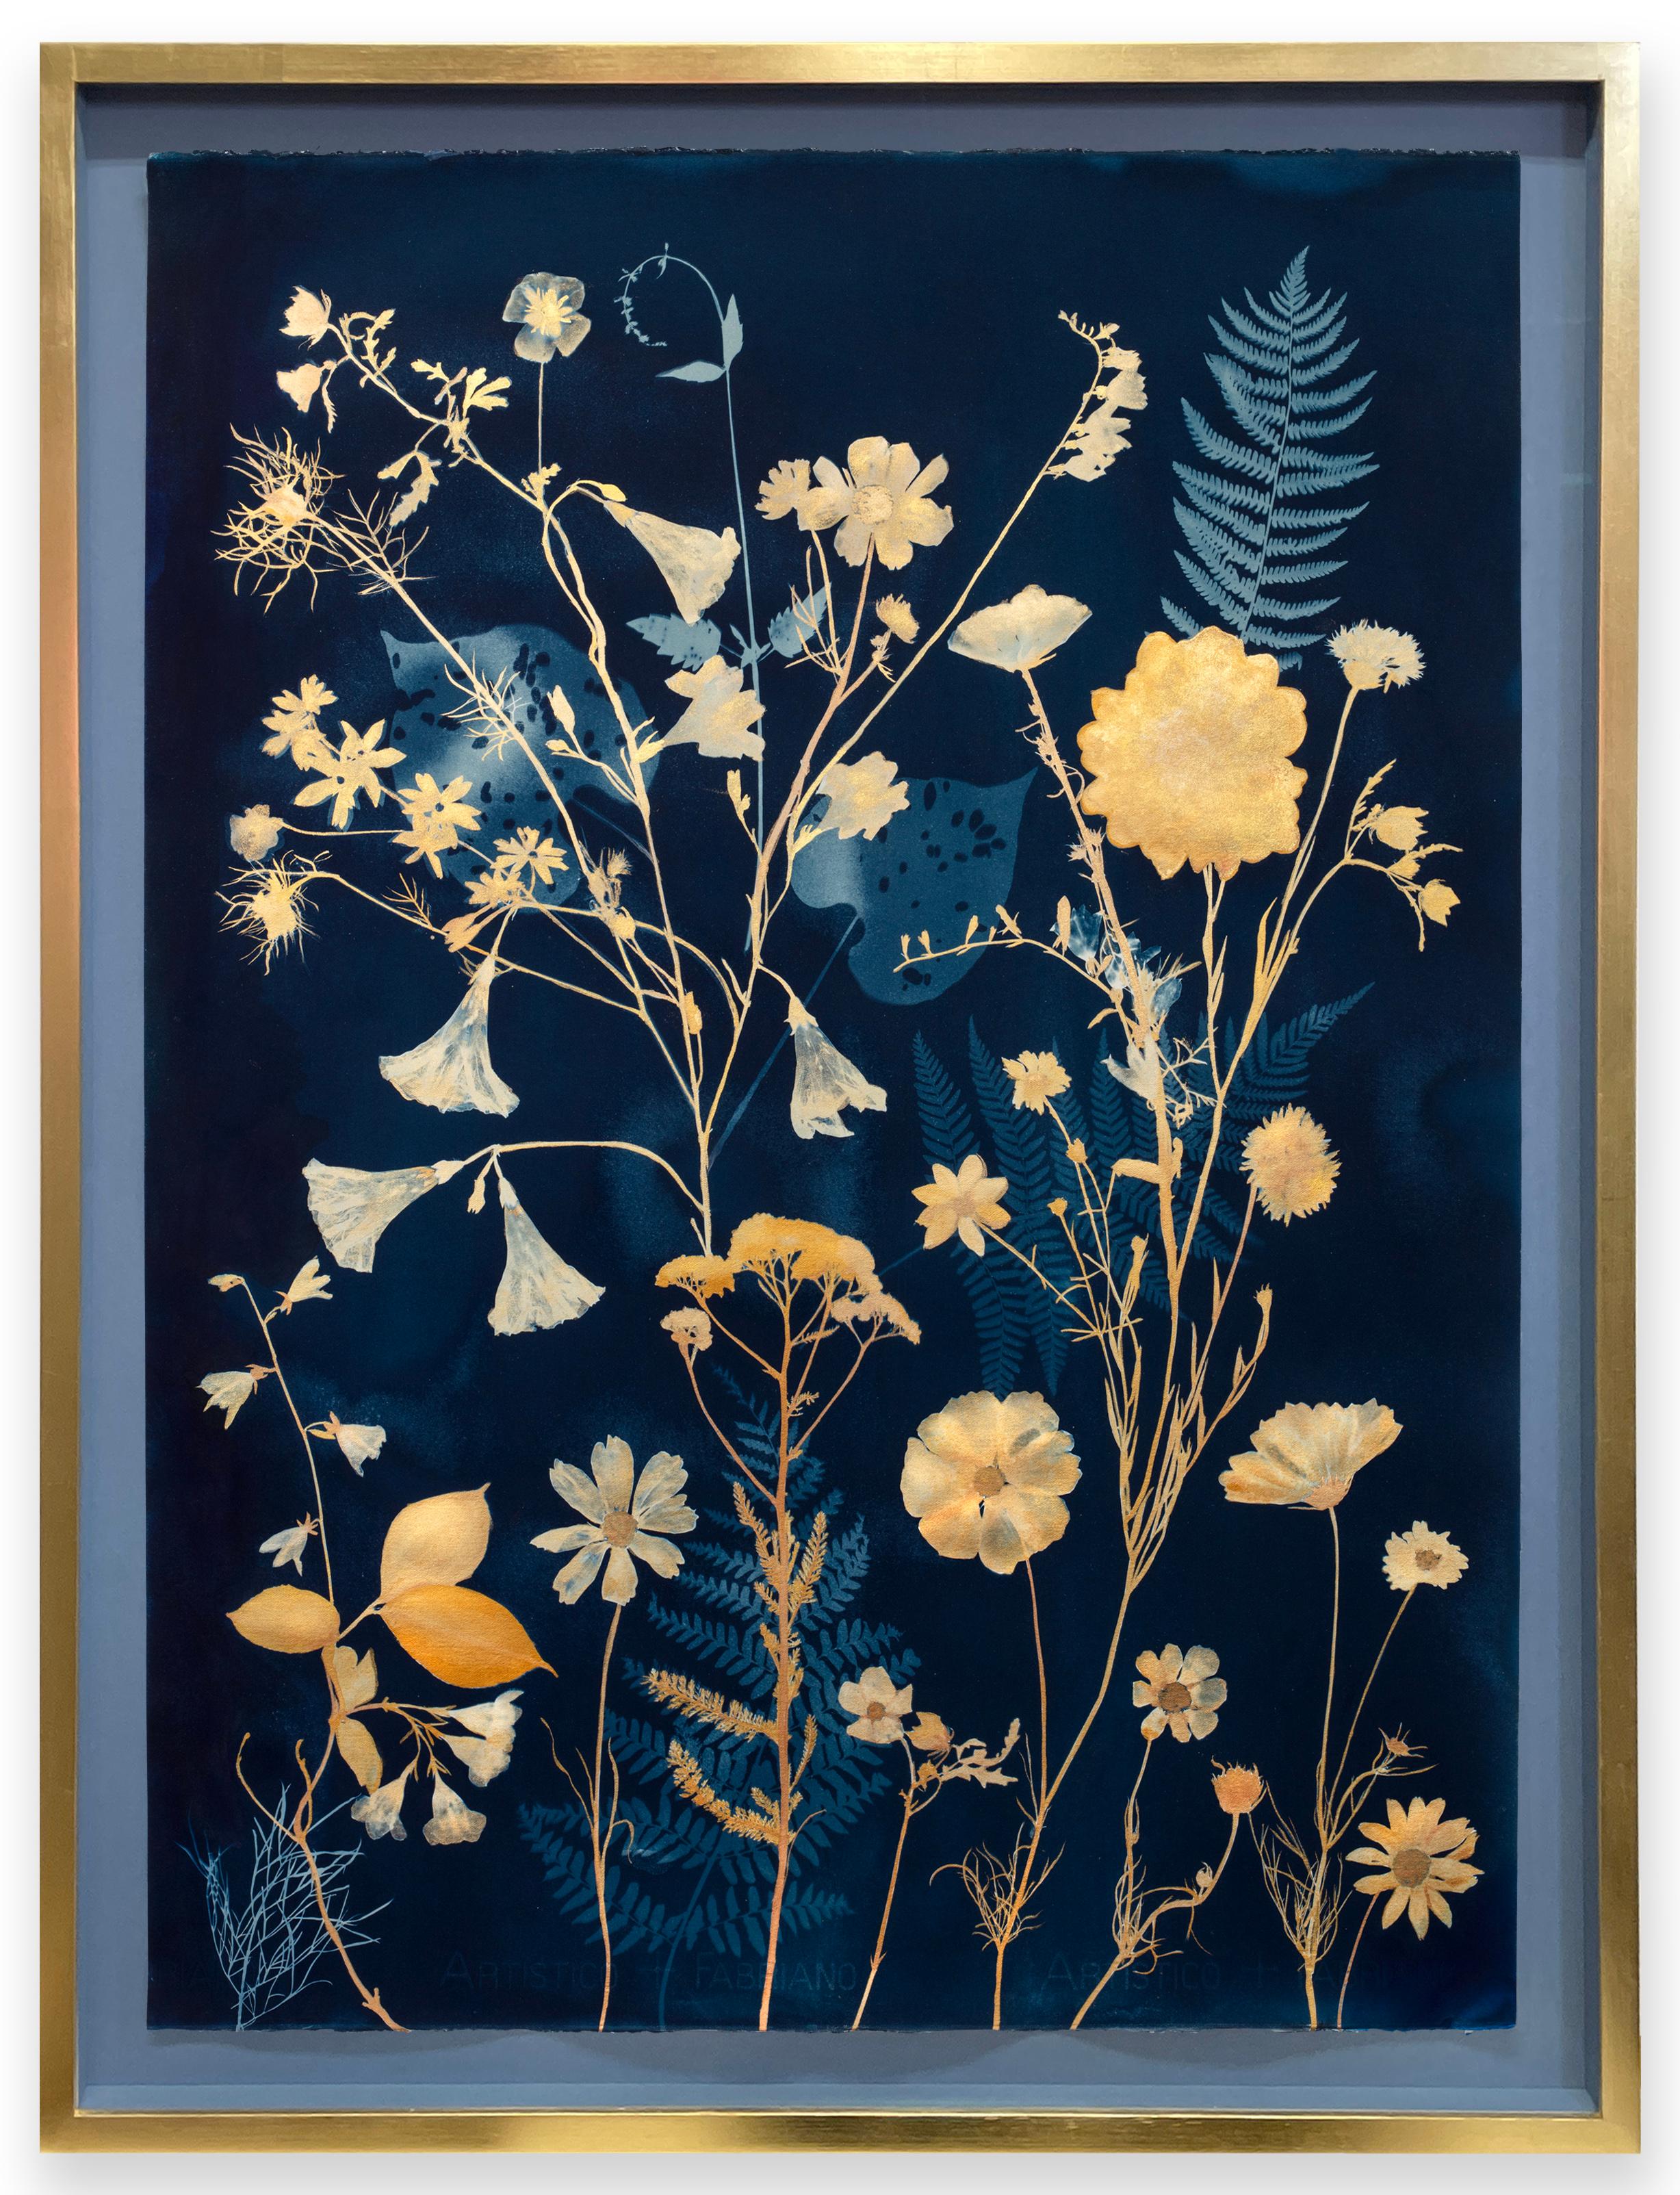 Julia Whitney Barnes Figurative Painting - Gold Morning Glories, Etc. (Still Life Painting of Flowers on Indigo Blue) 